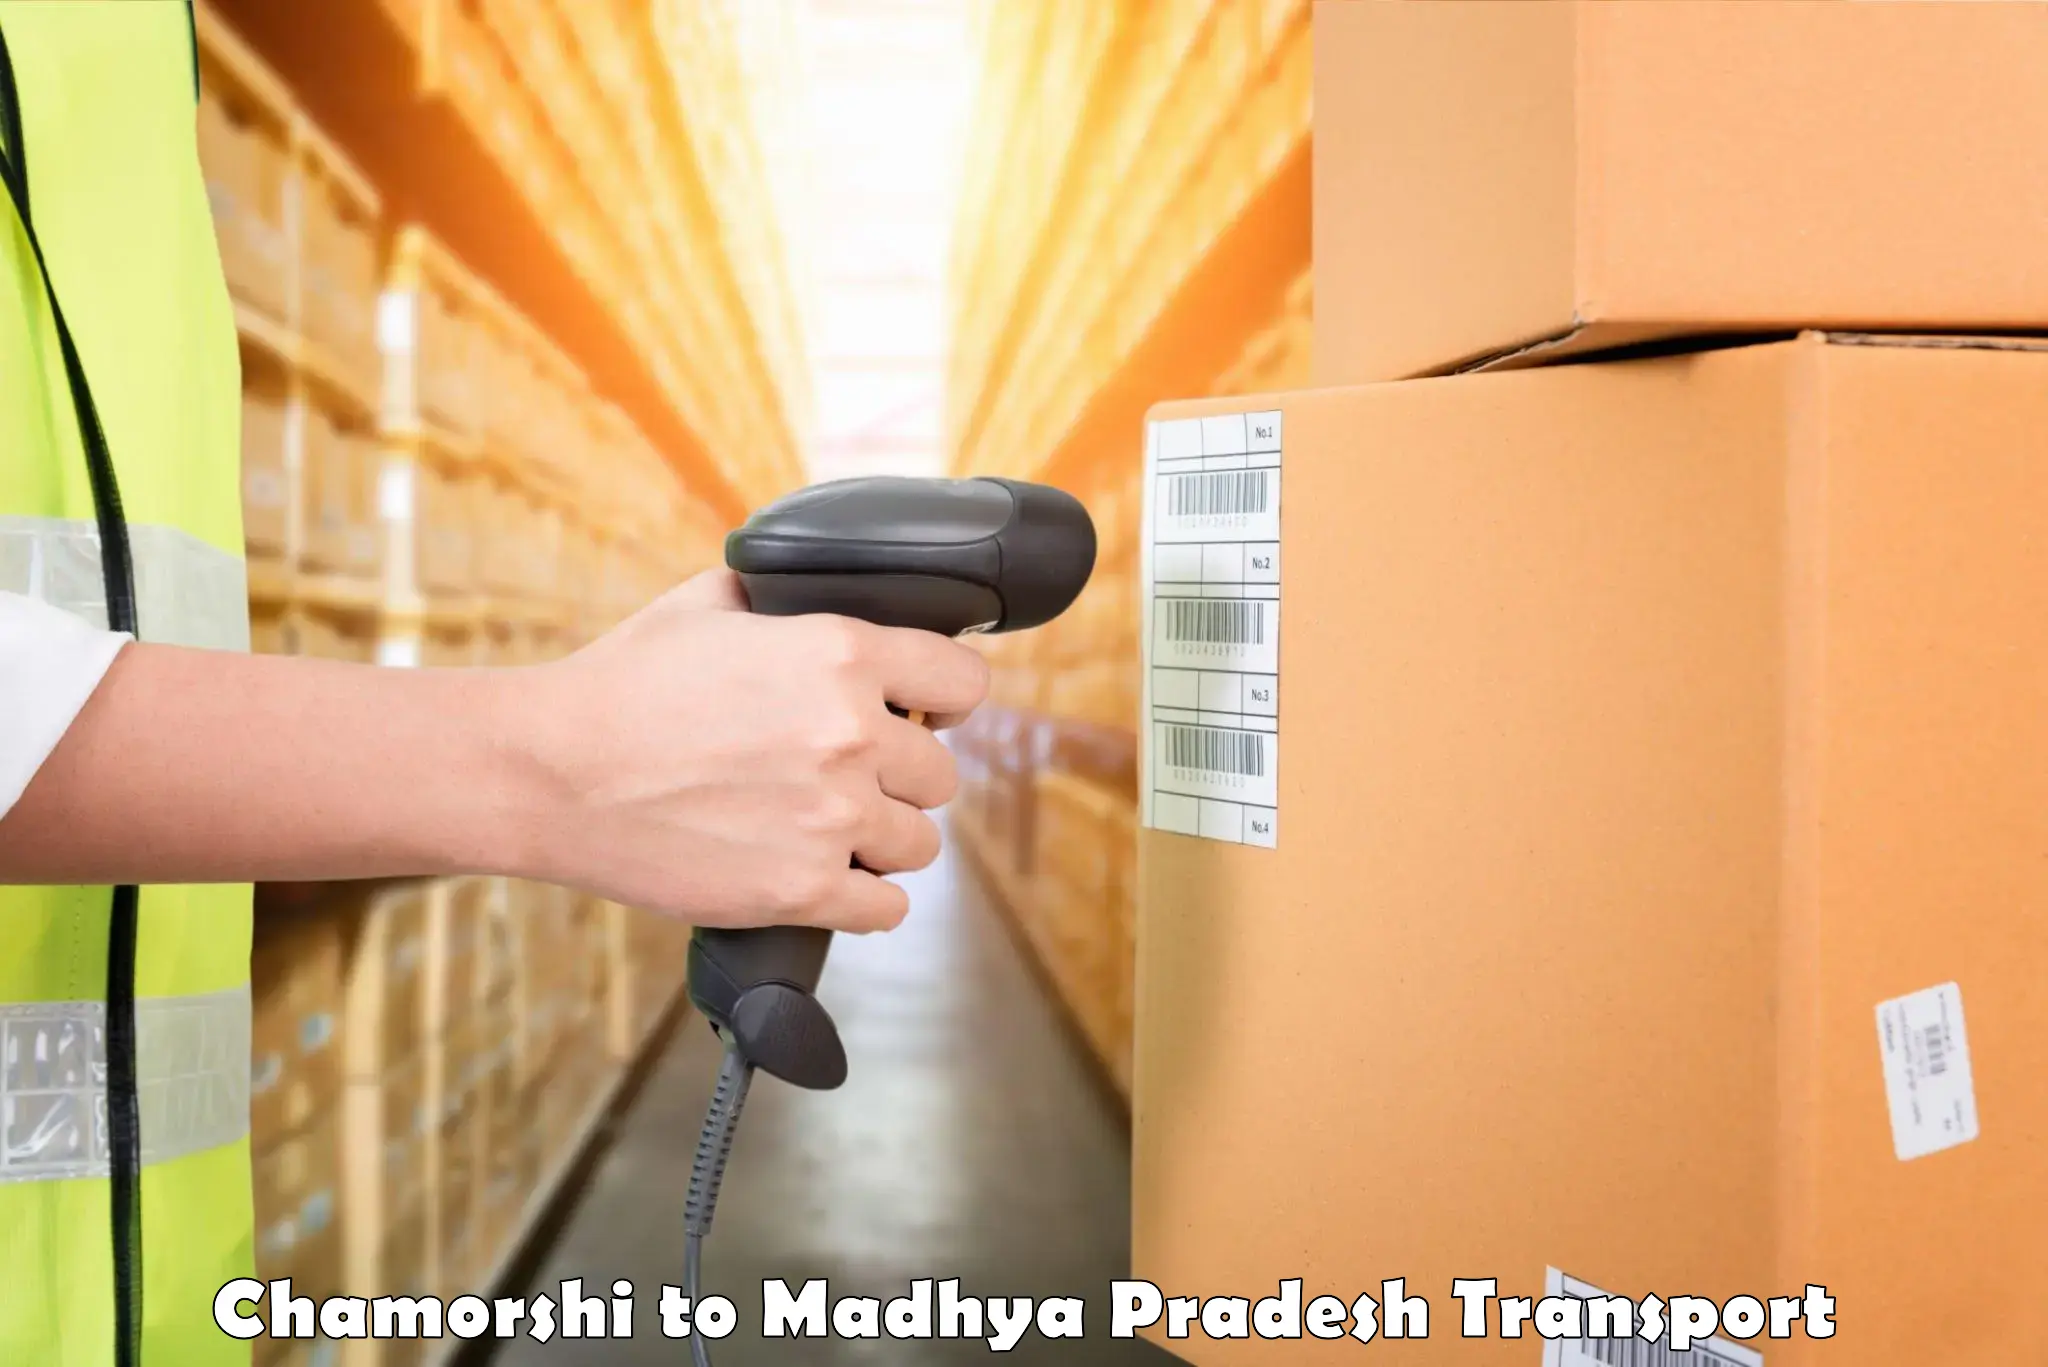 Delivery service Chamorshi to Nalkheda